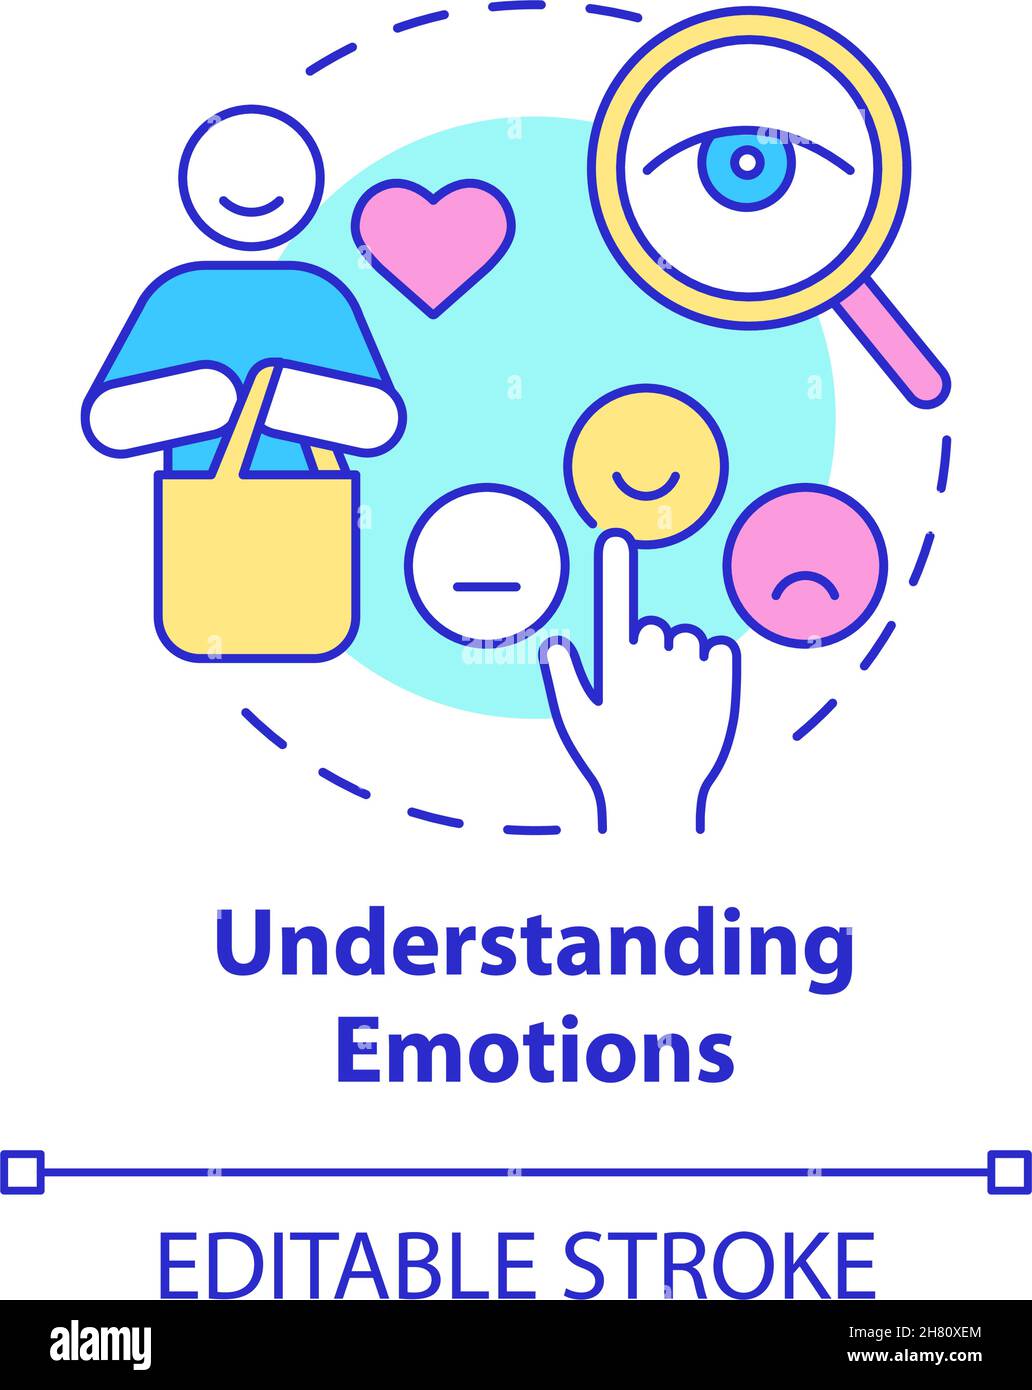 Understanding emotions concept icon Stock Vector Image & Art - Alamy